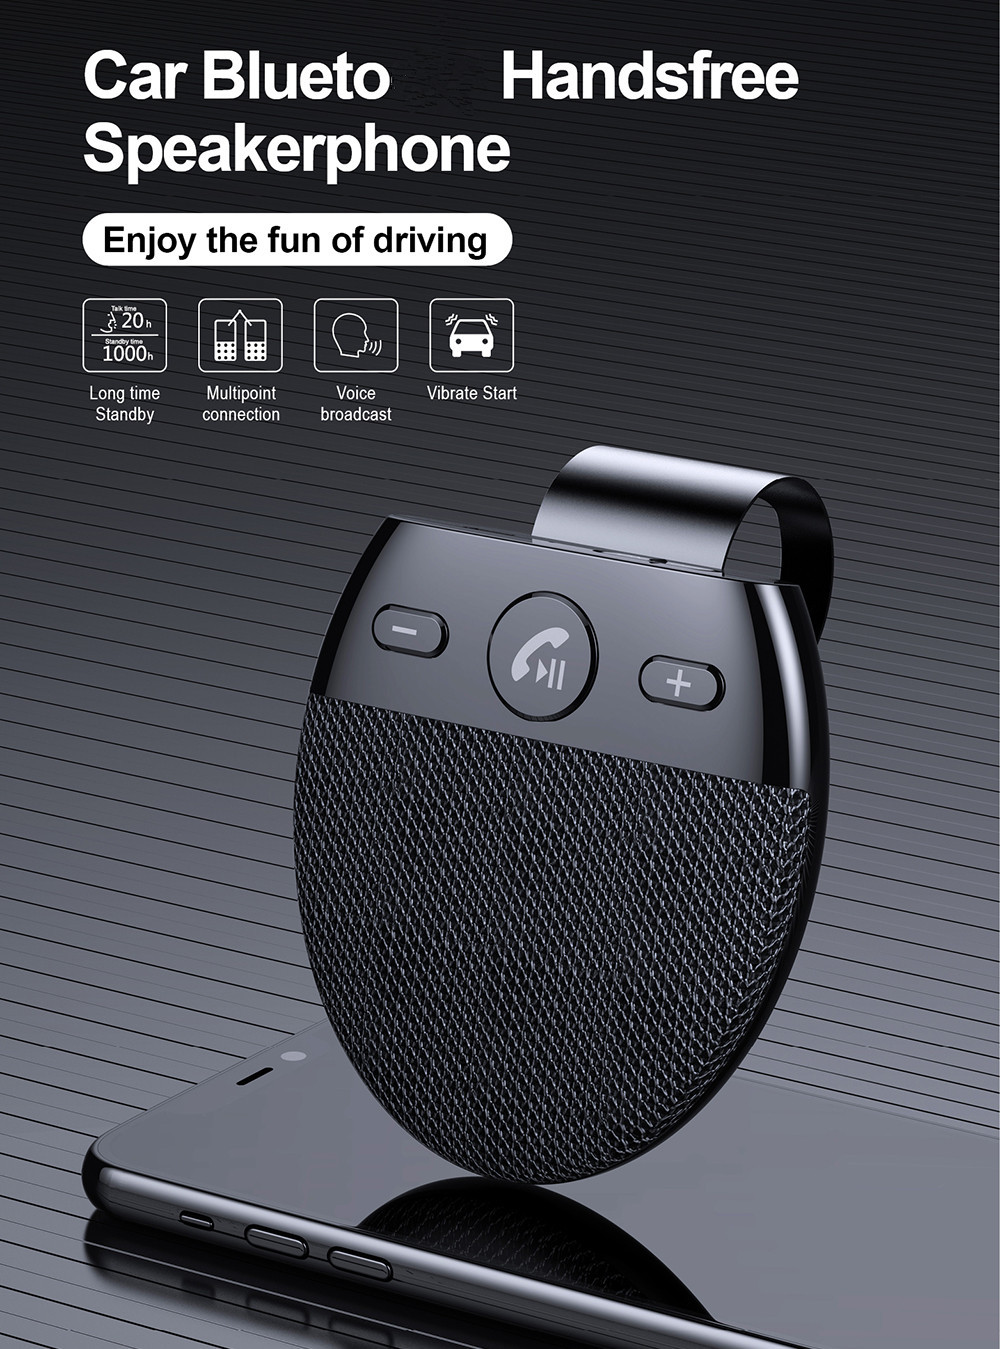 SP11-bluetooth-51-BT-Adapter-bluetooth-Car-Speaker-Handsfree-Speakerphone-500h-Battery-Life-1900018-1